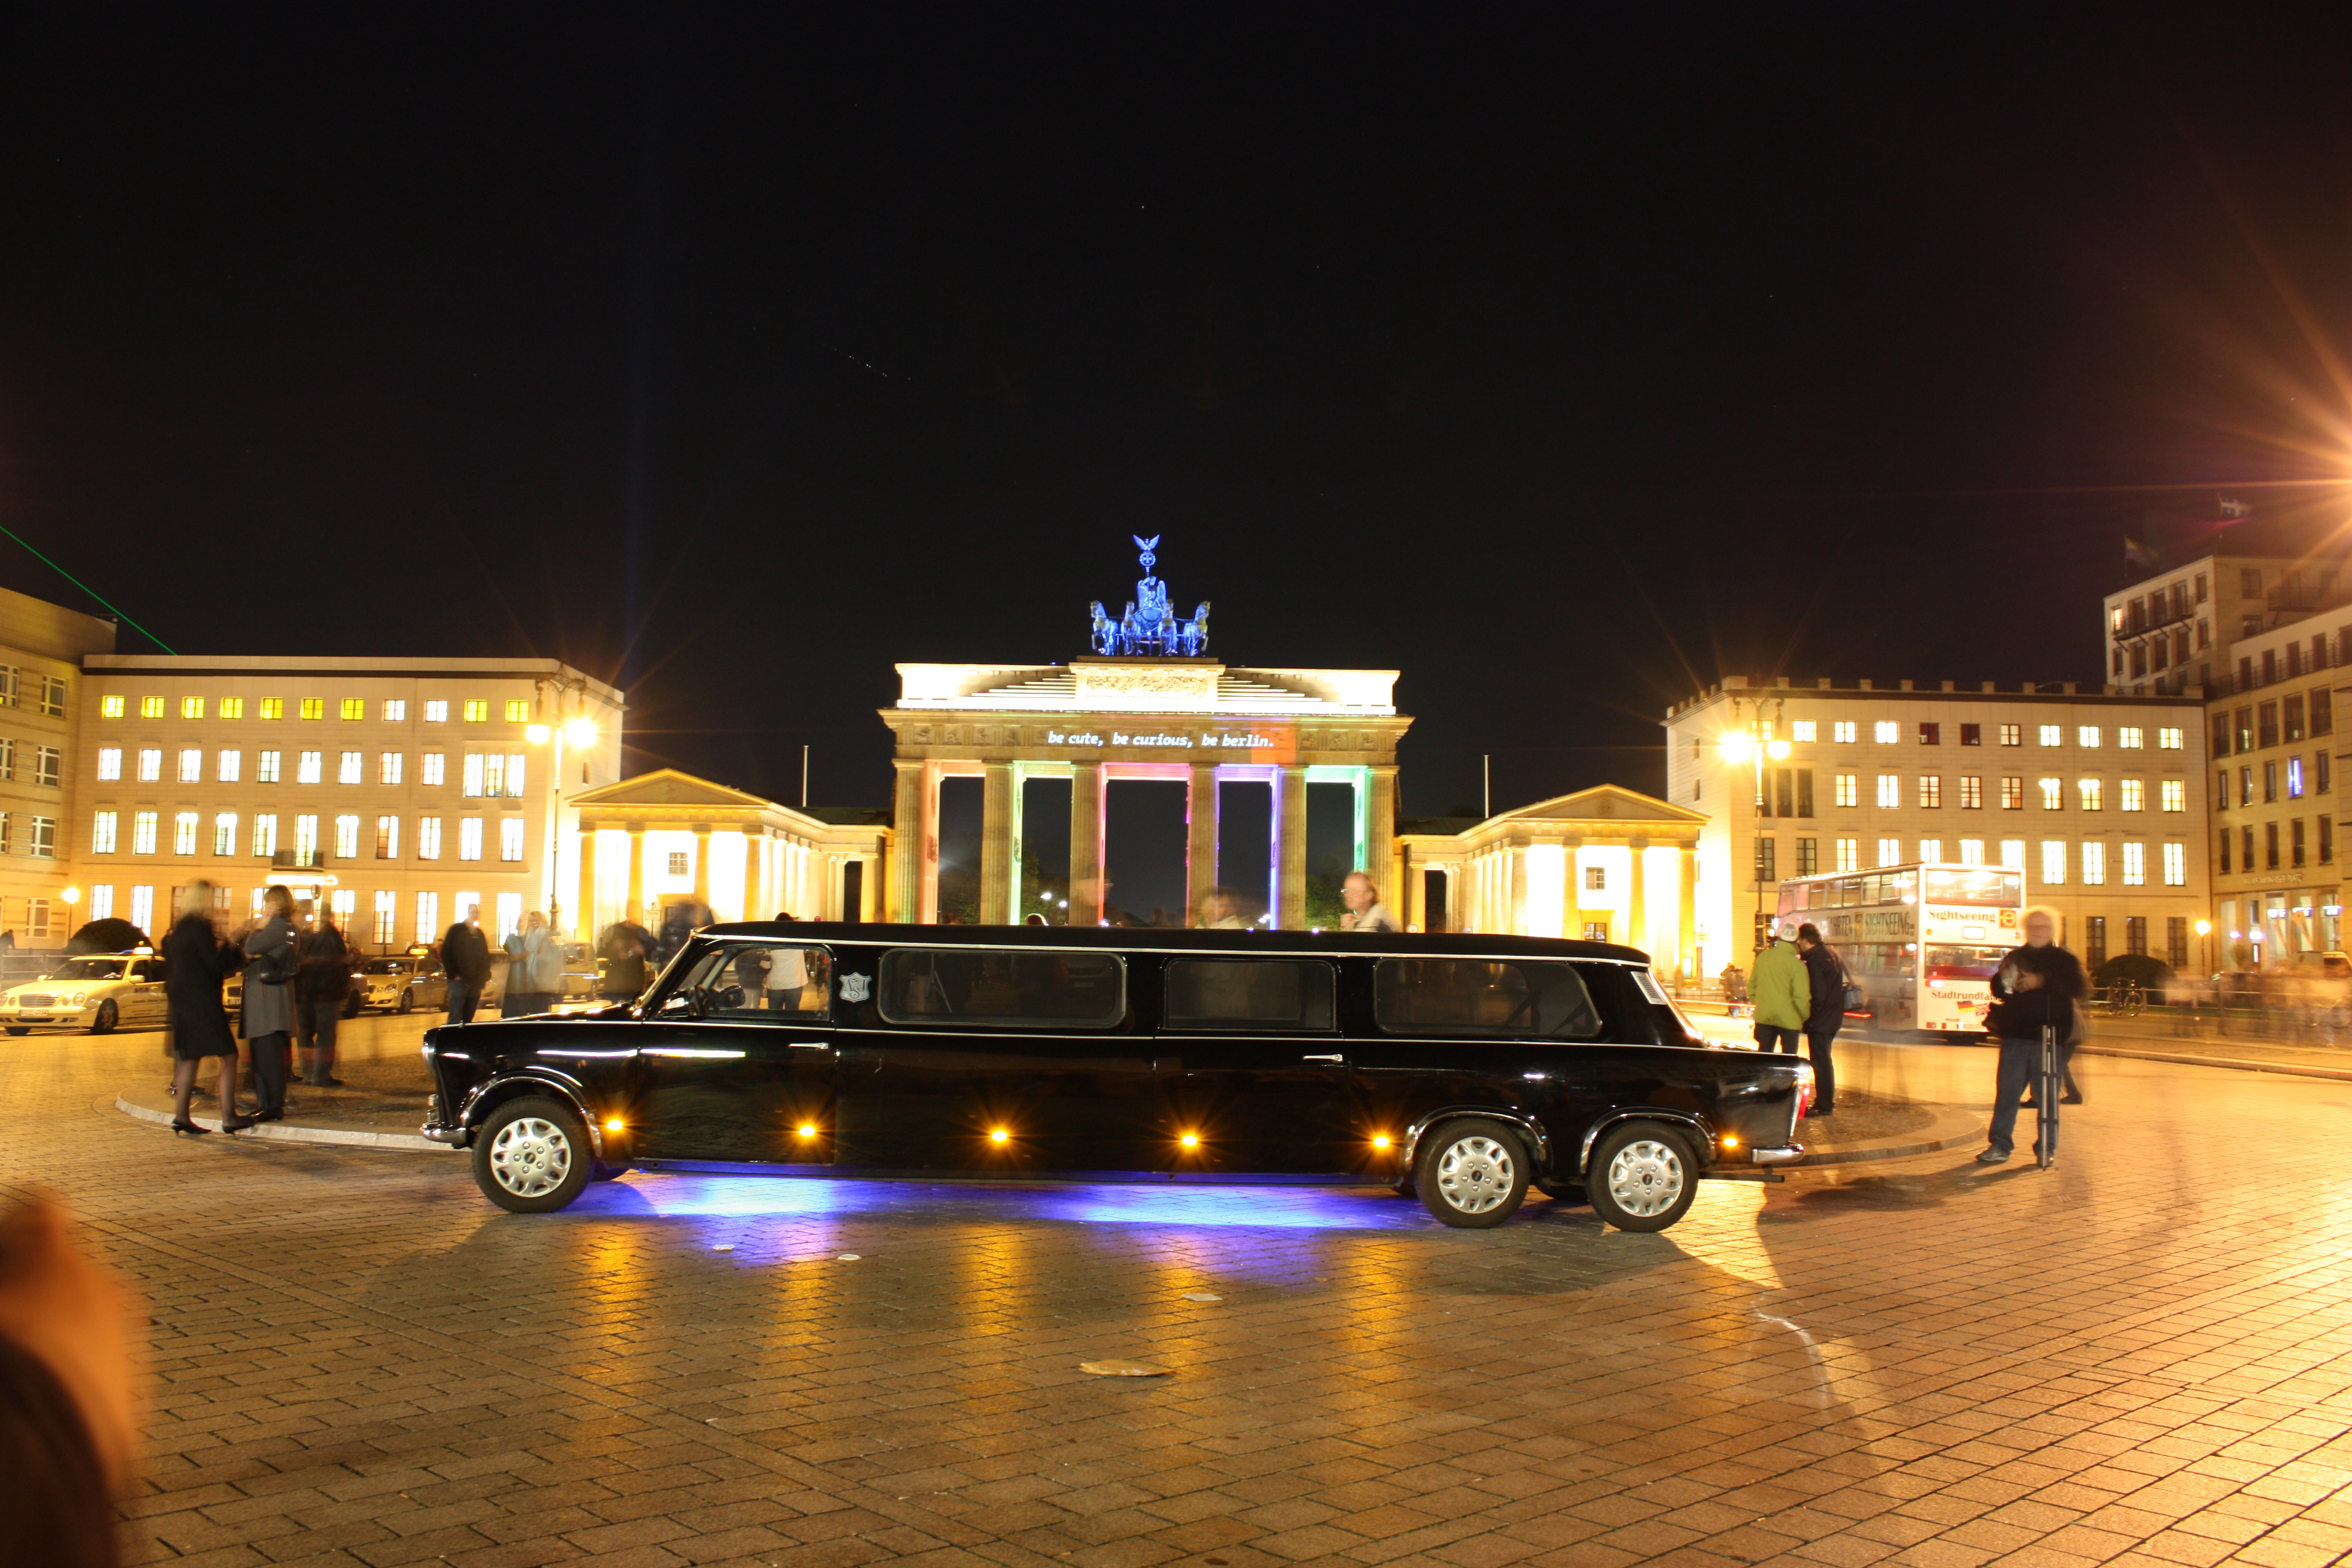 File:Trabi-XXL-Trabant-City of Lights-Berlin-2008.jpg - Wikimedia ...